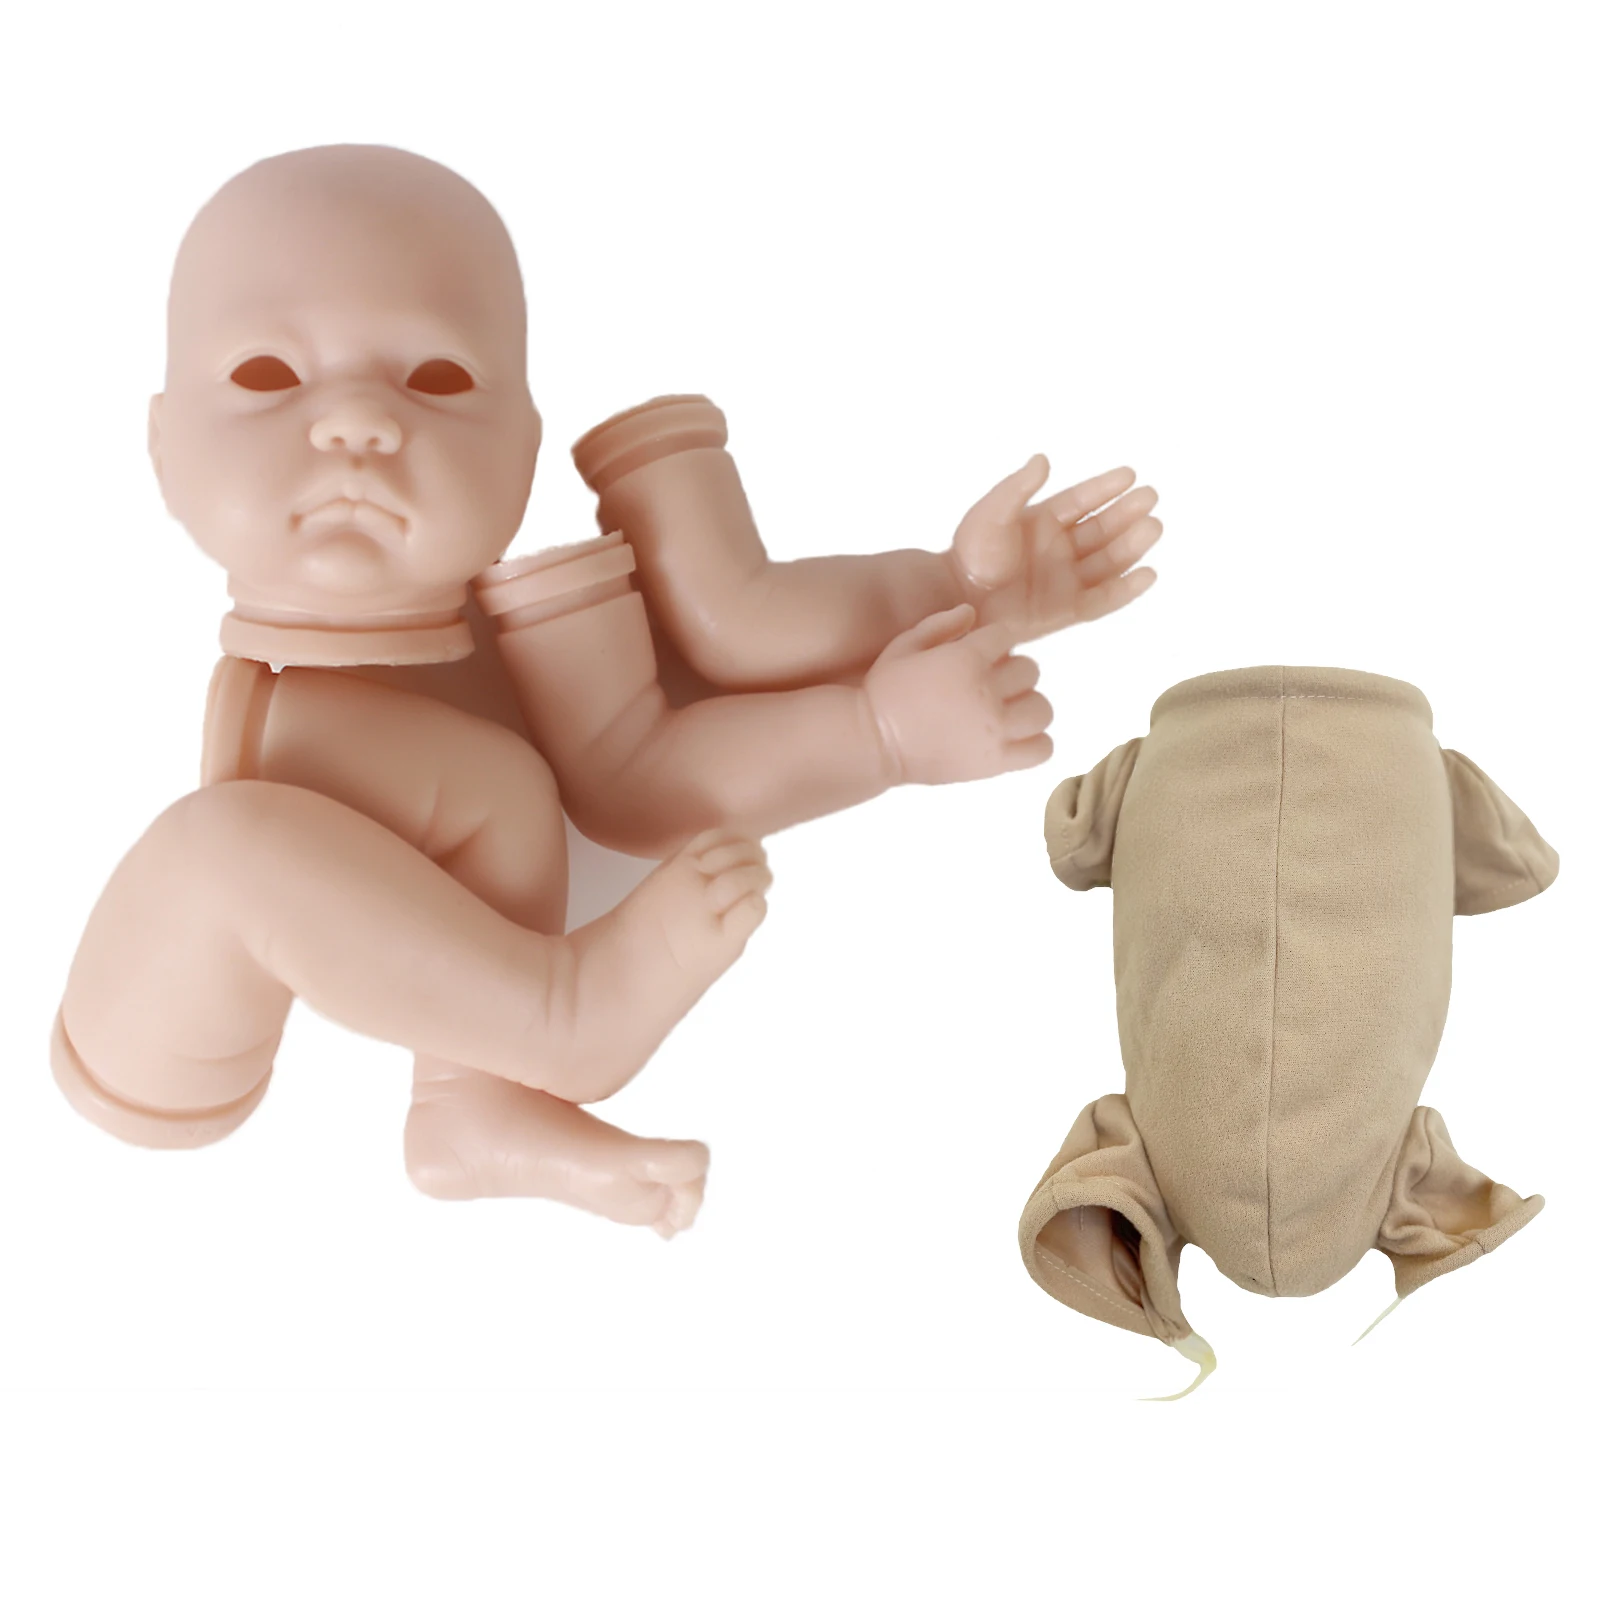 22inch Gift Vinyl Head Soft Simulation Reborn Baby Doll Kit Full Limbs Unpainted